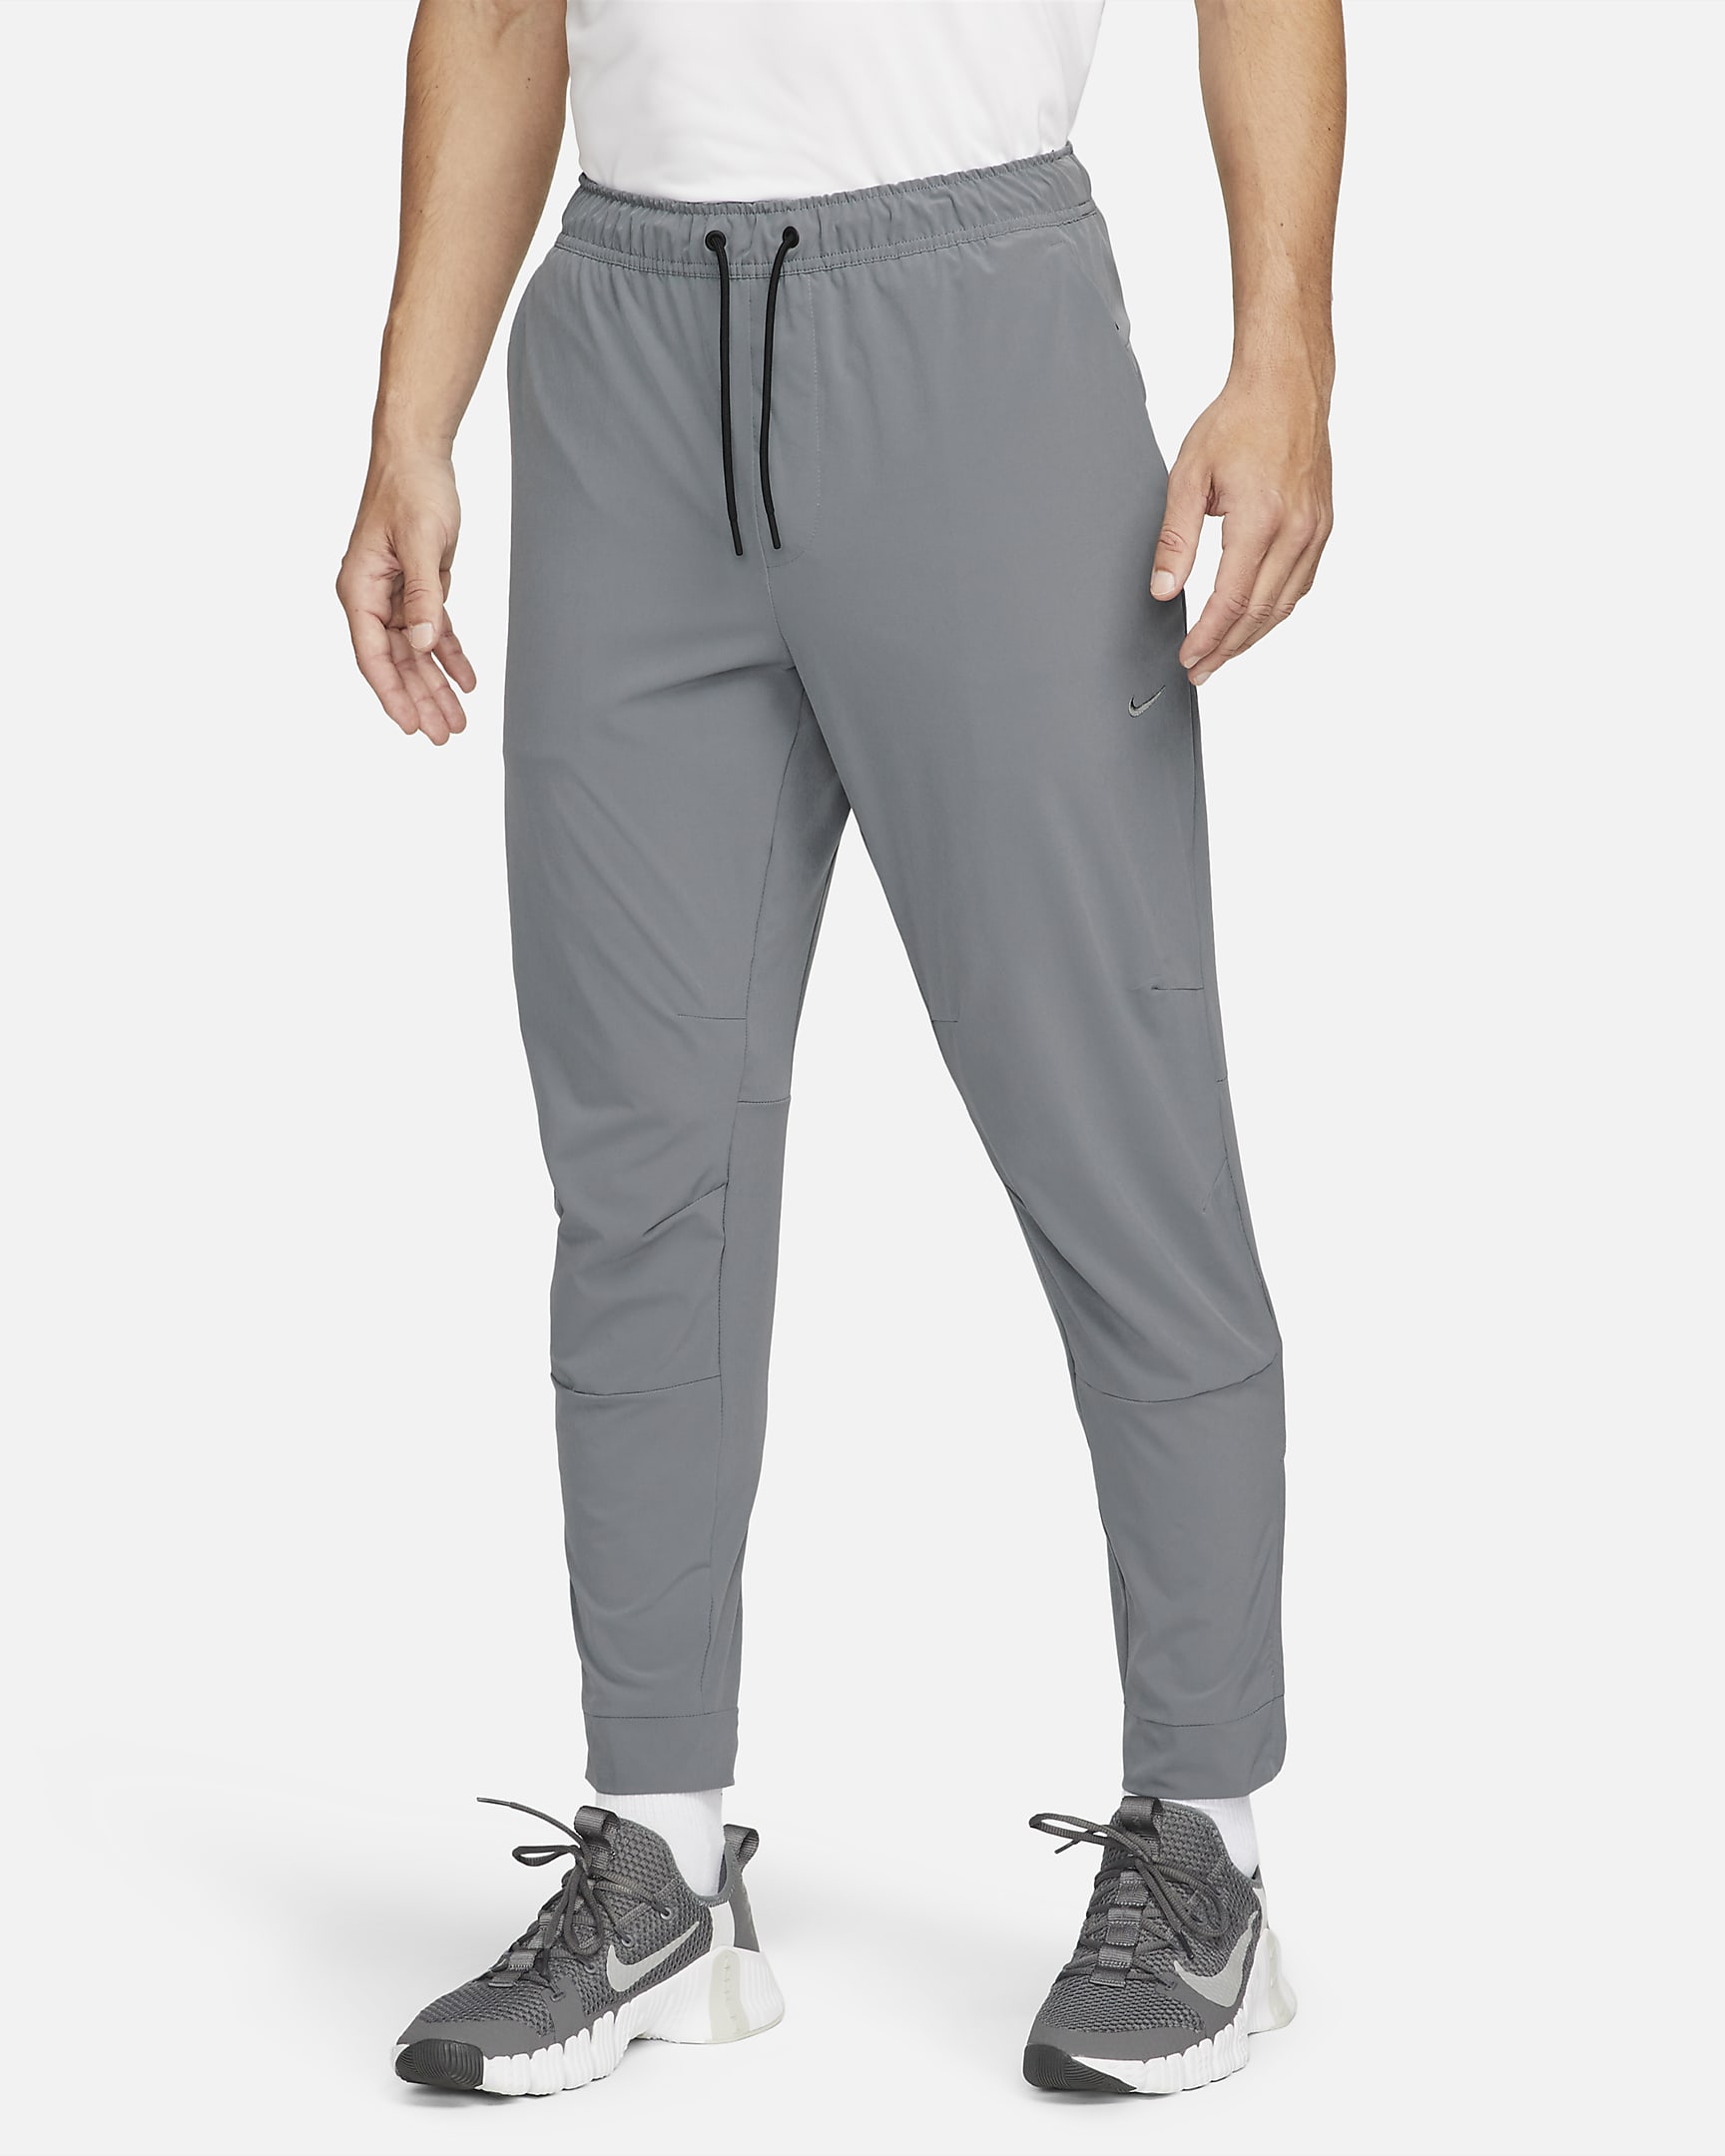 Nike Unlimited Men's Dri-FIT Zip Cuff Versatile Trousers - Smoke Grey/Black/Smoke Grey